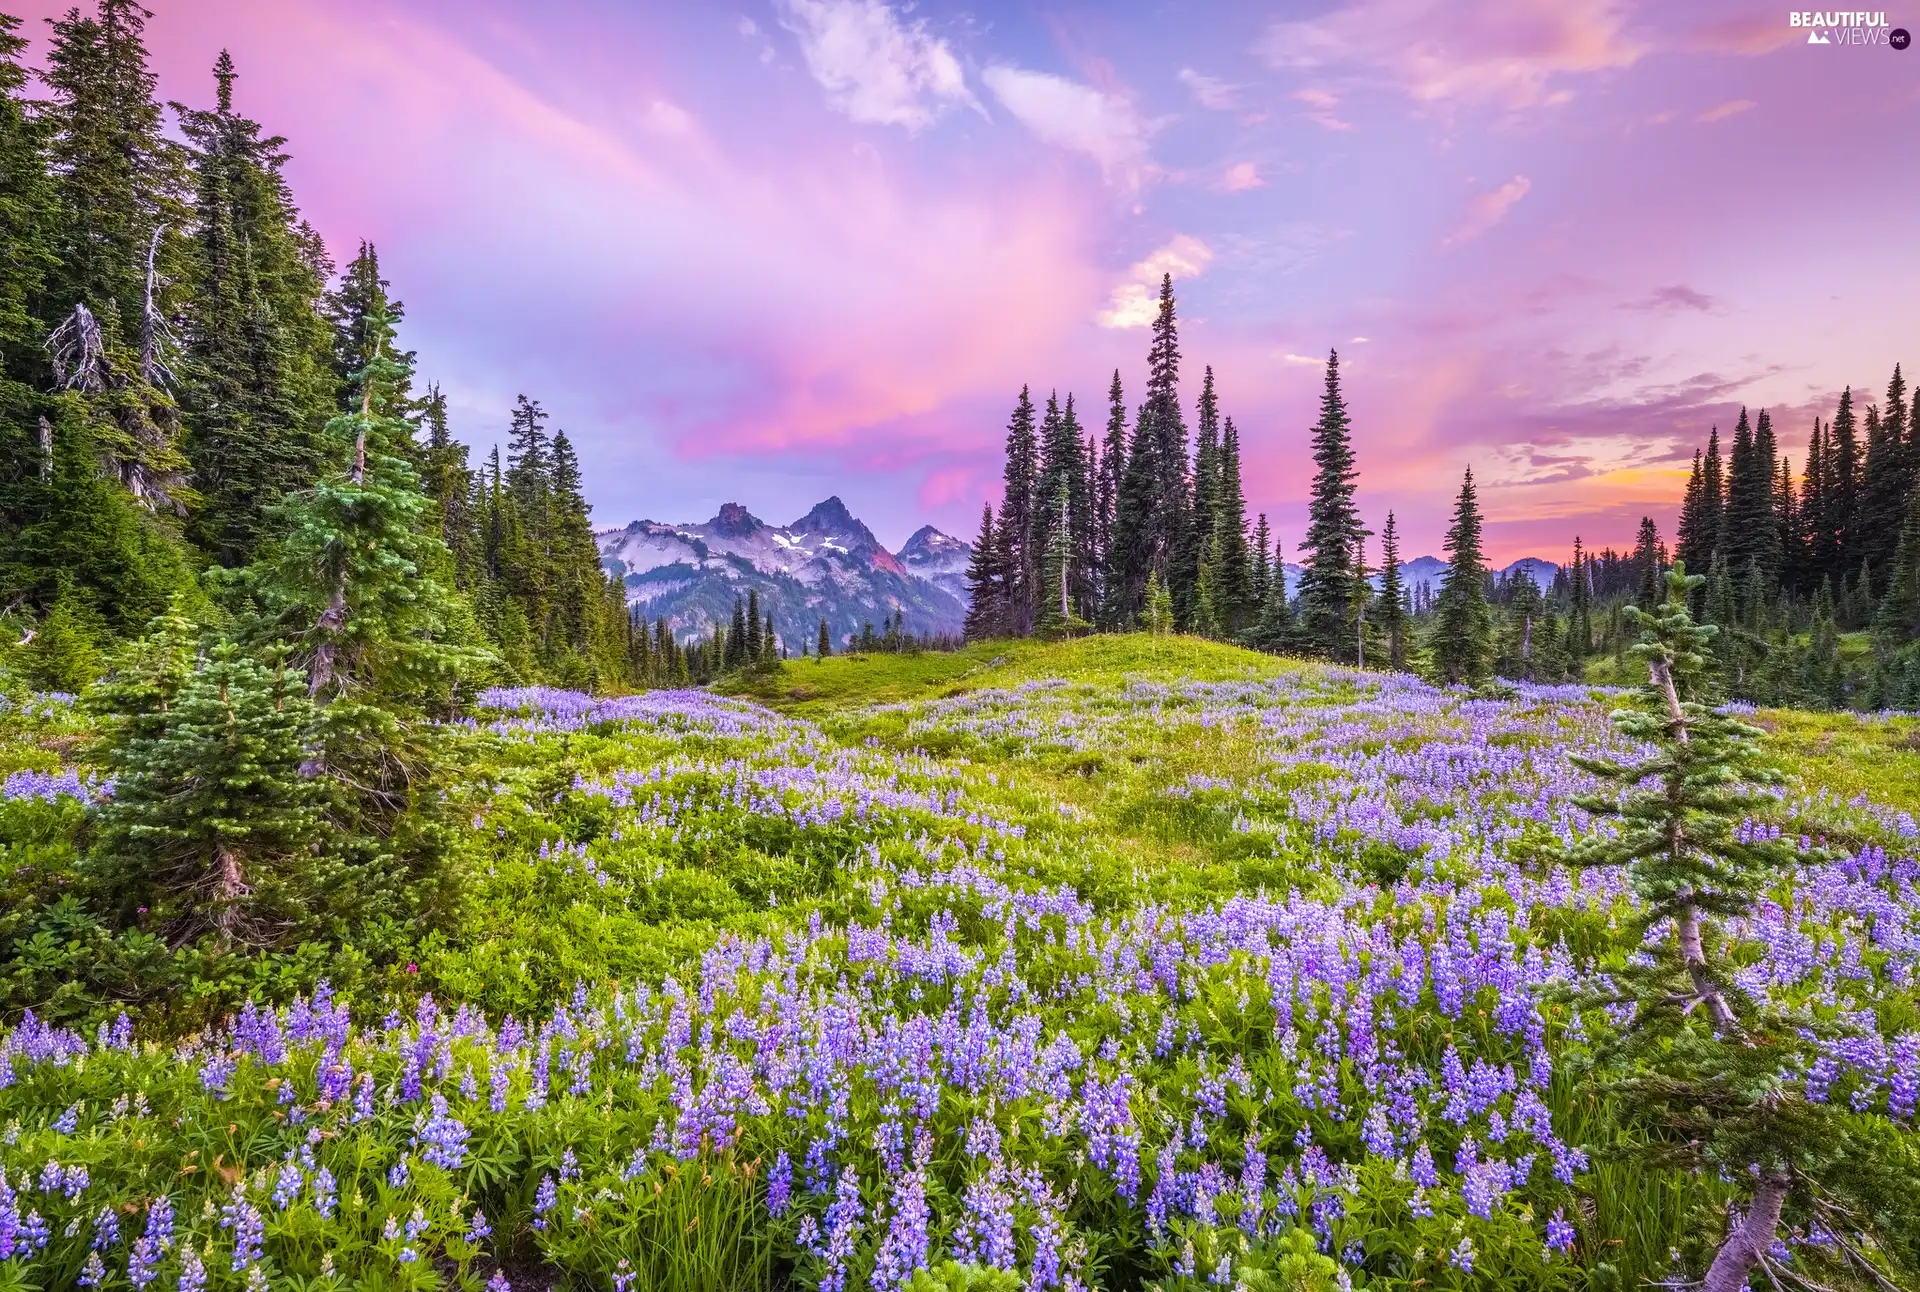 Washington State, Mount Rainier National Park, The United States, Flowers, viewes, Stratovolcano Mount Rainier, Meadow, trees, lupine